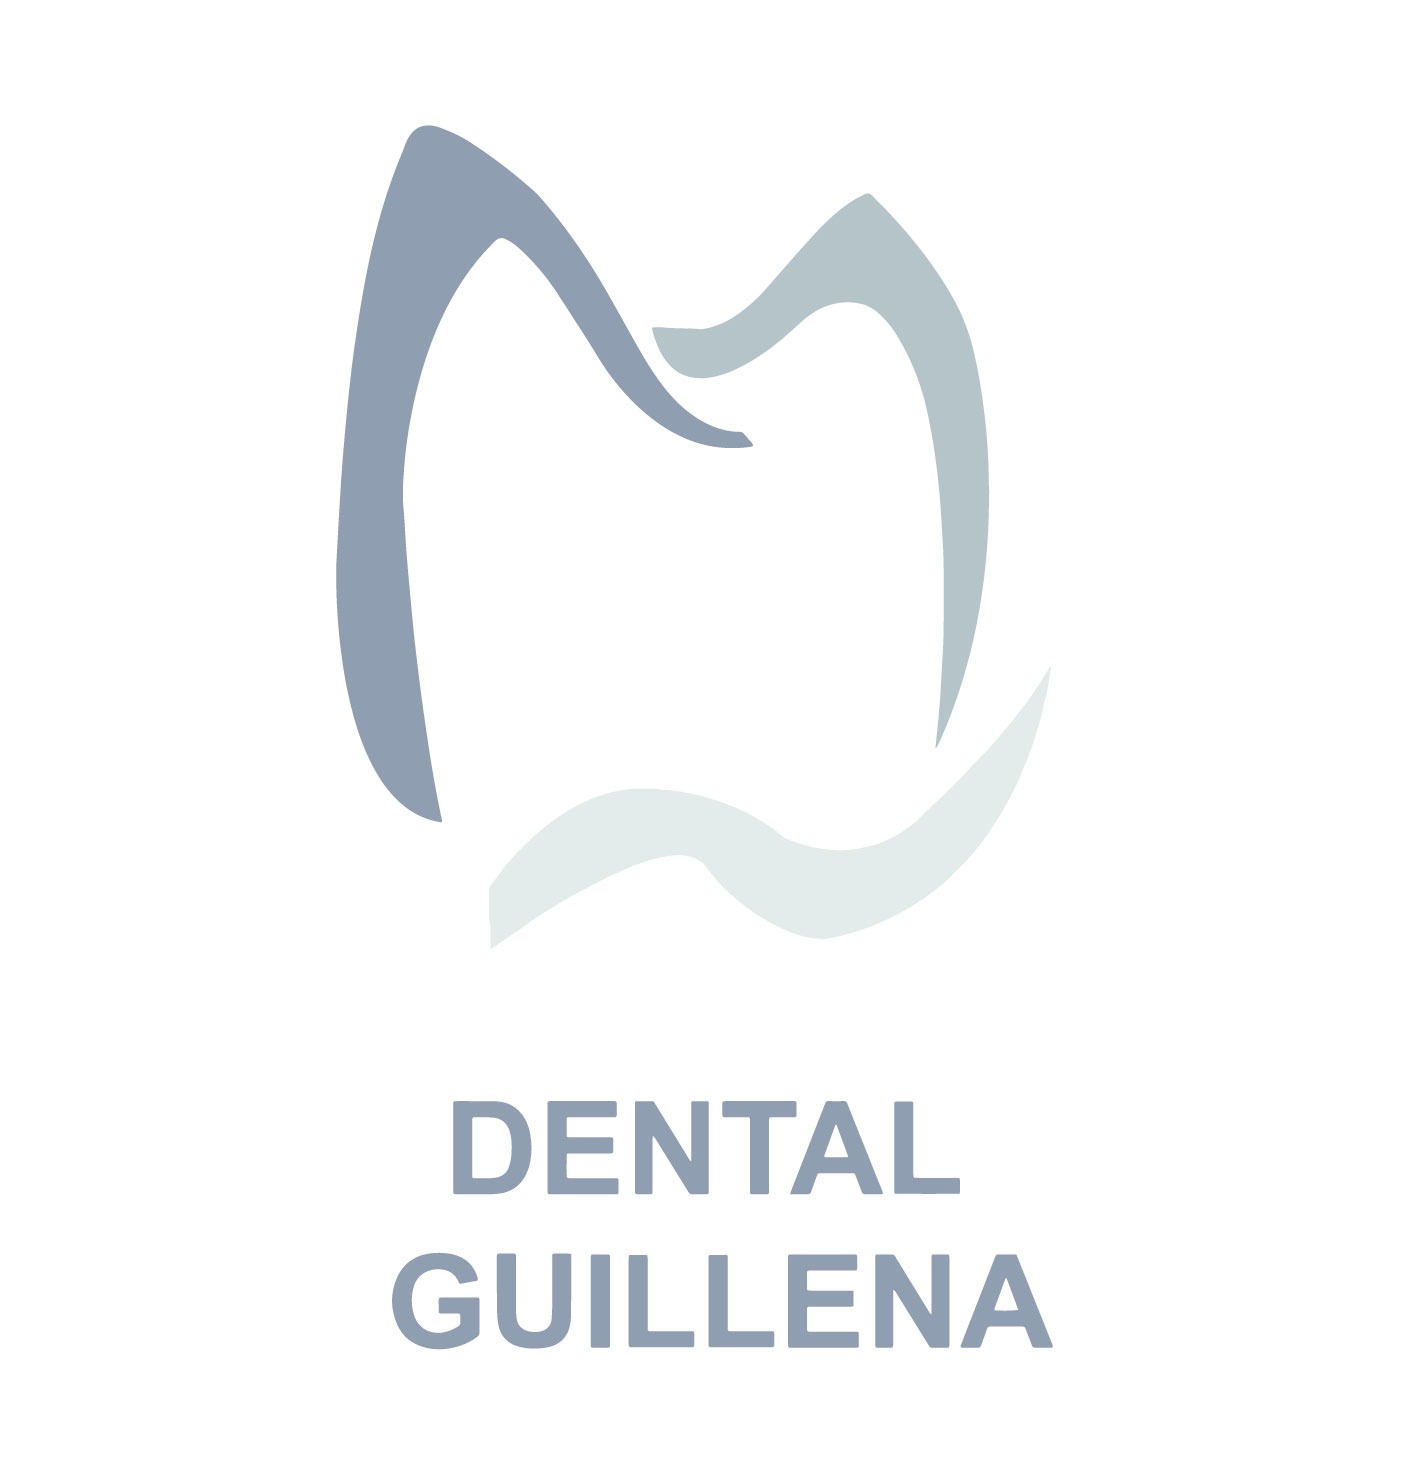 Dental Guillena